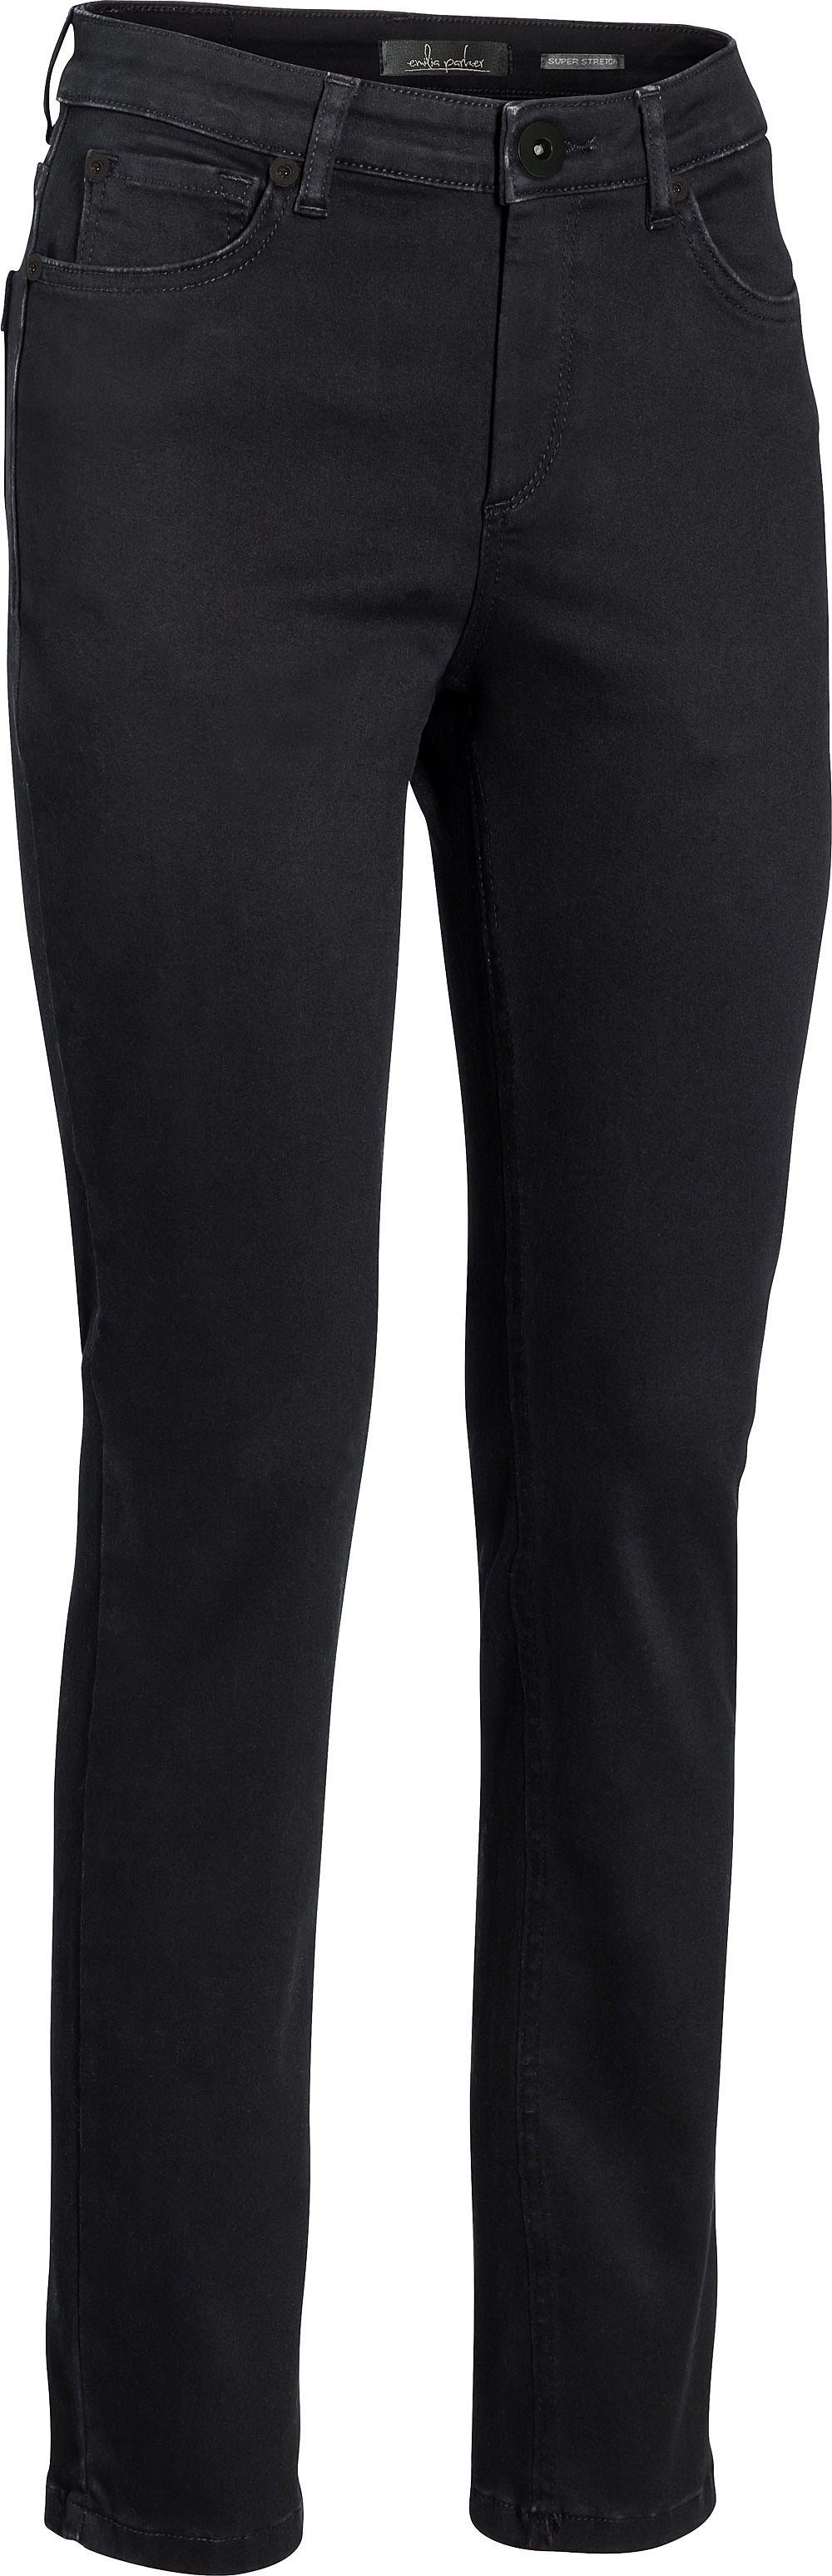 Emilia Parker Stretch-Hose ultrabequeme Jeans mit knackigem Sitz schwarz